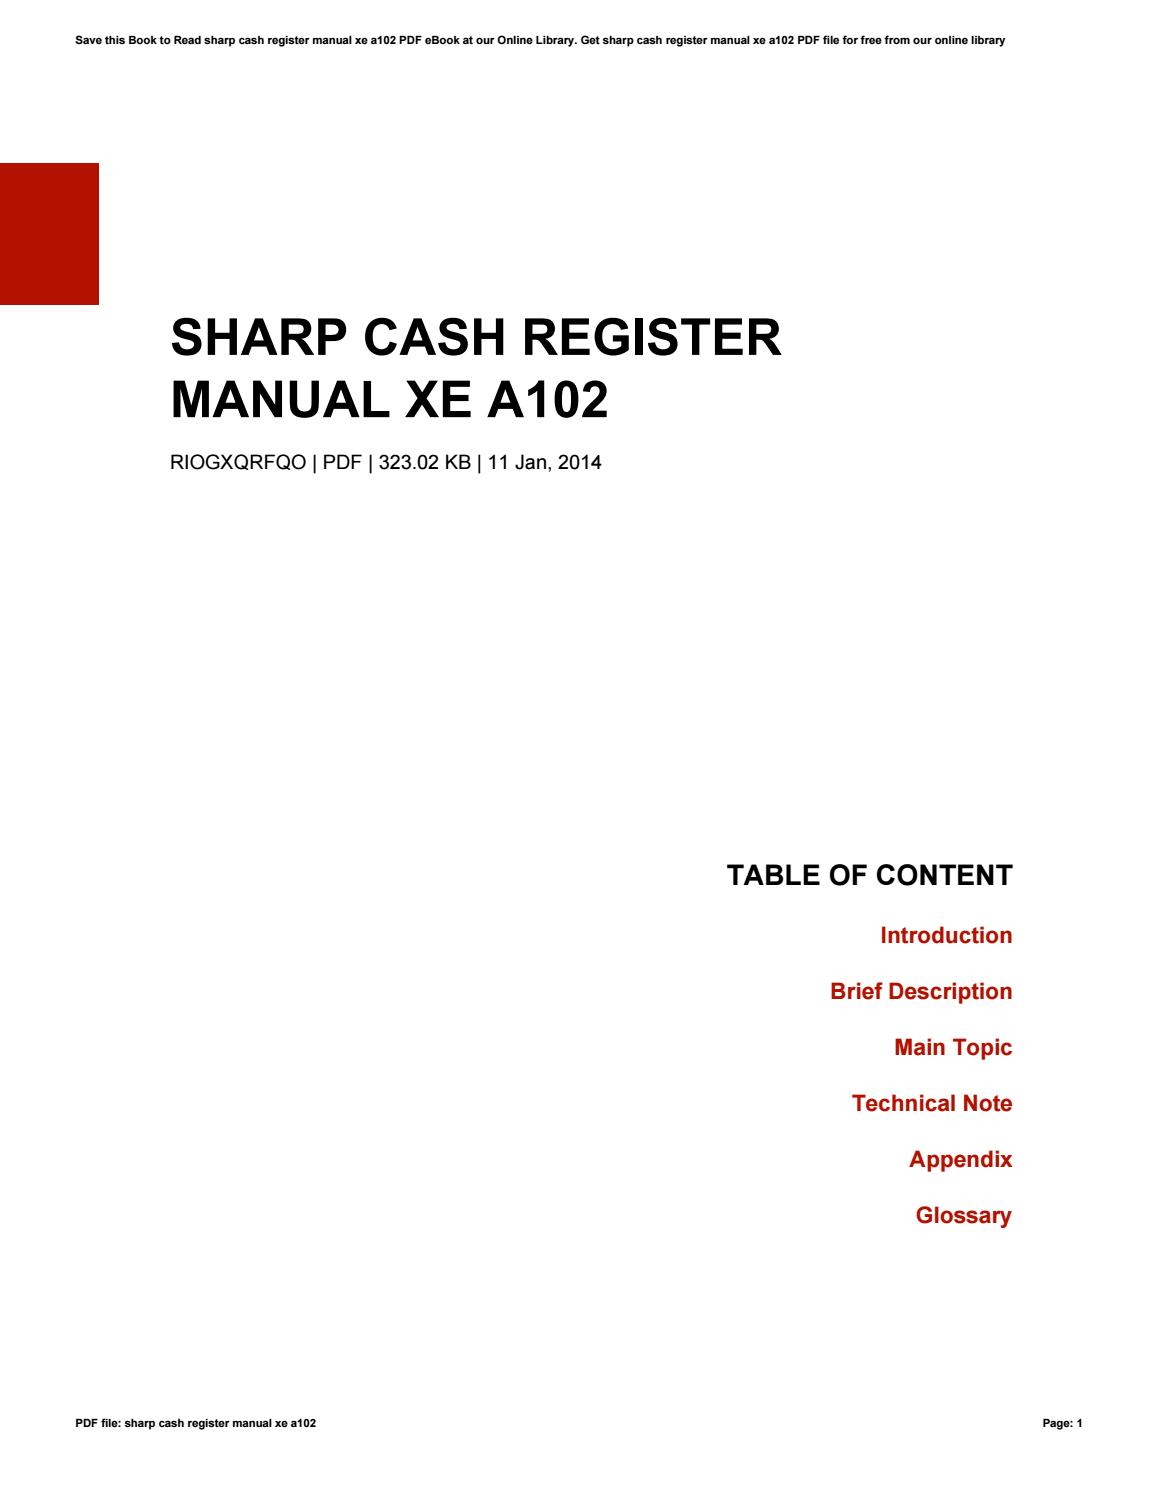 Sharp xe-a102 manual download